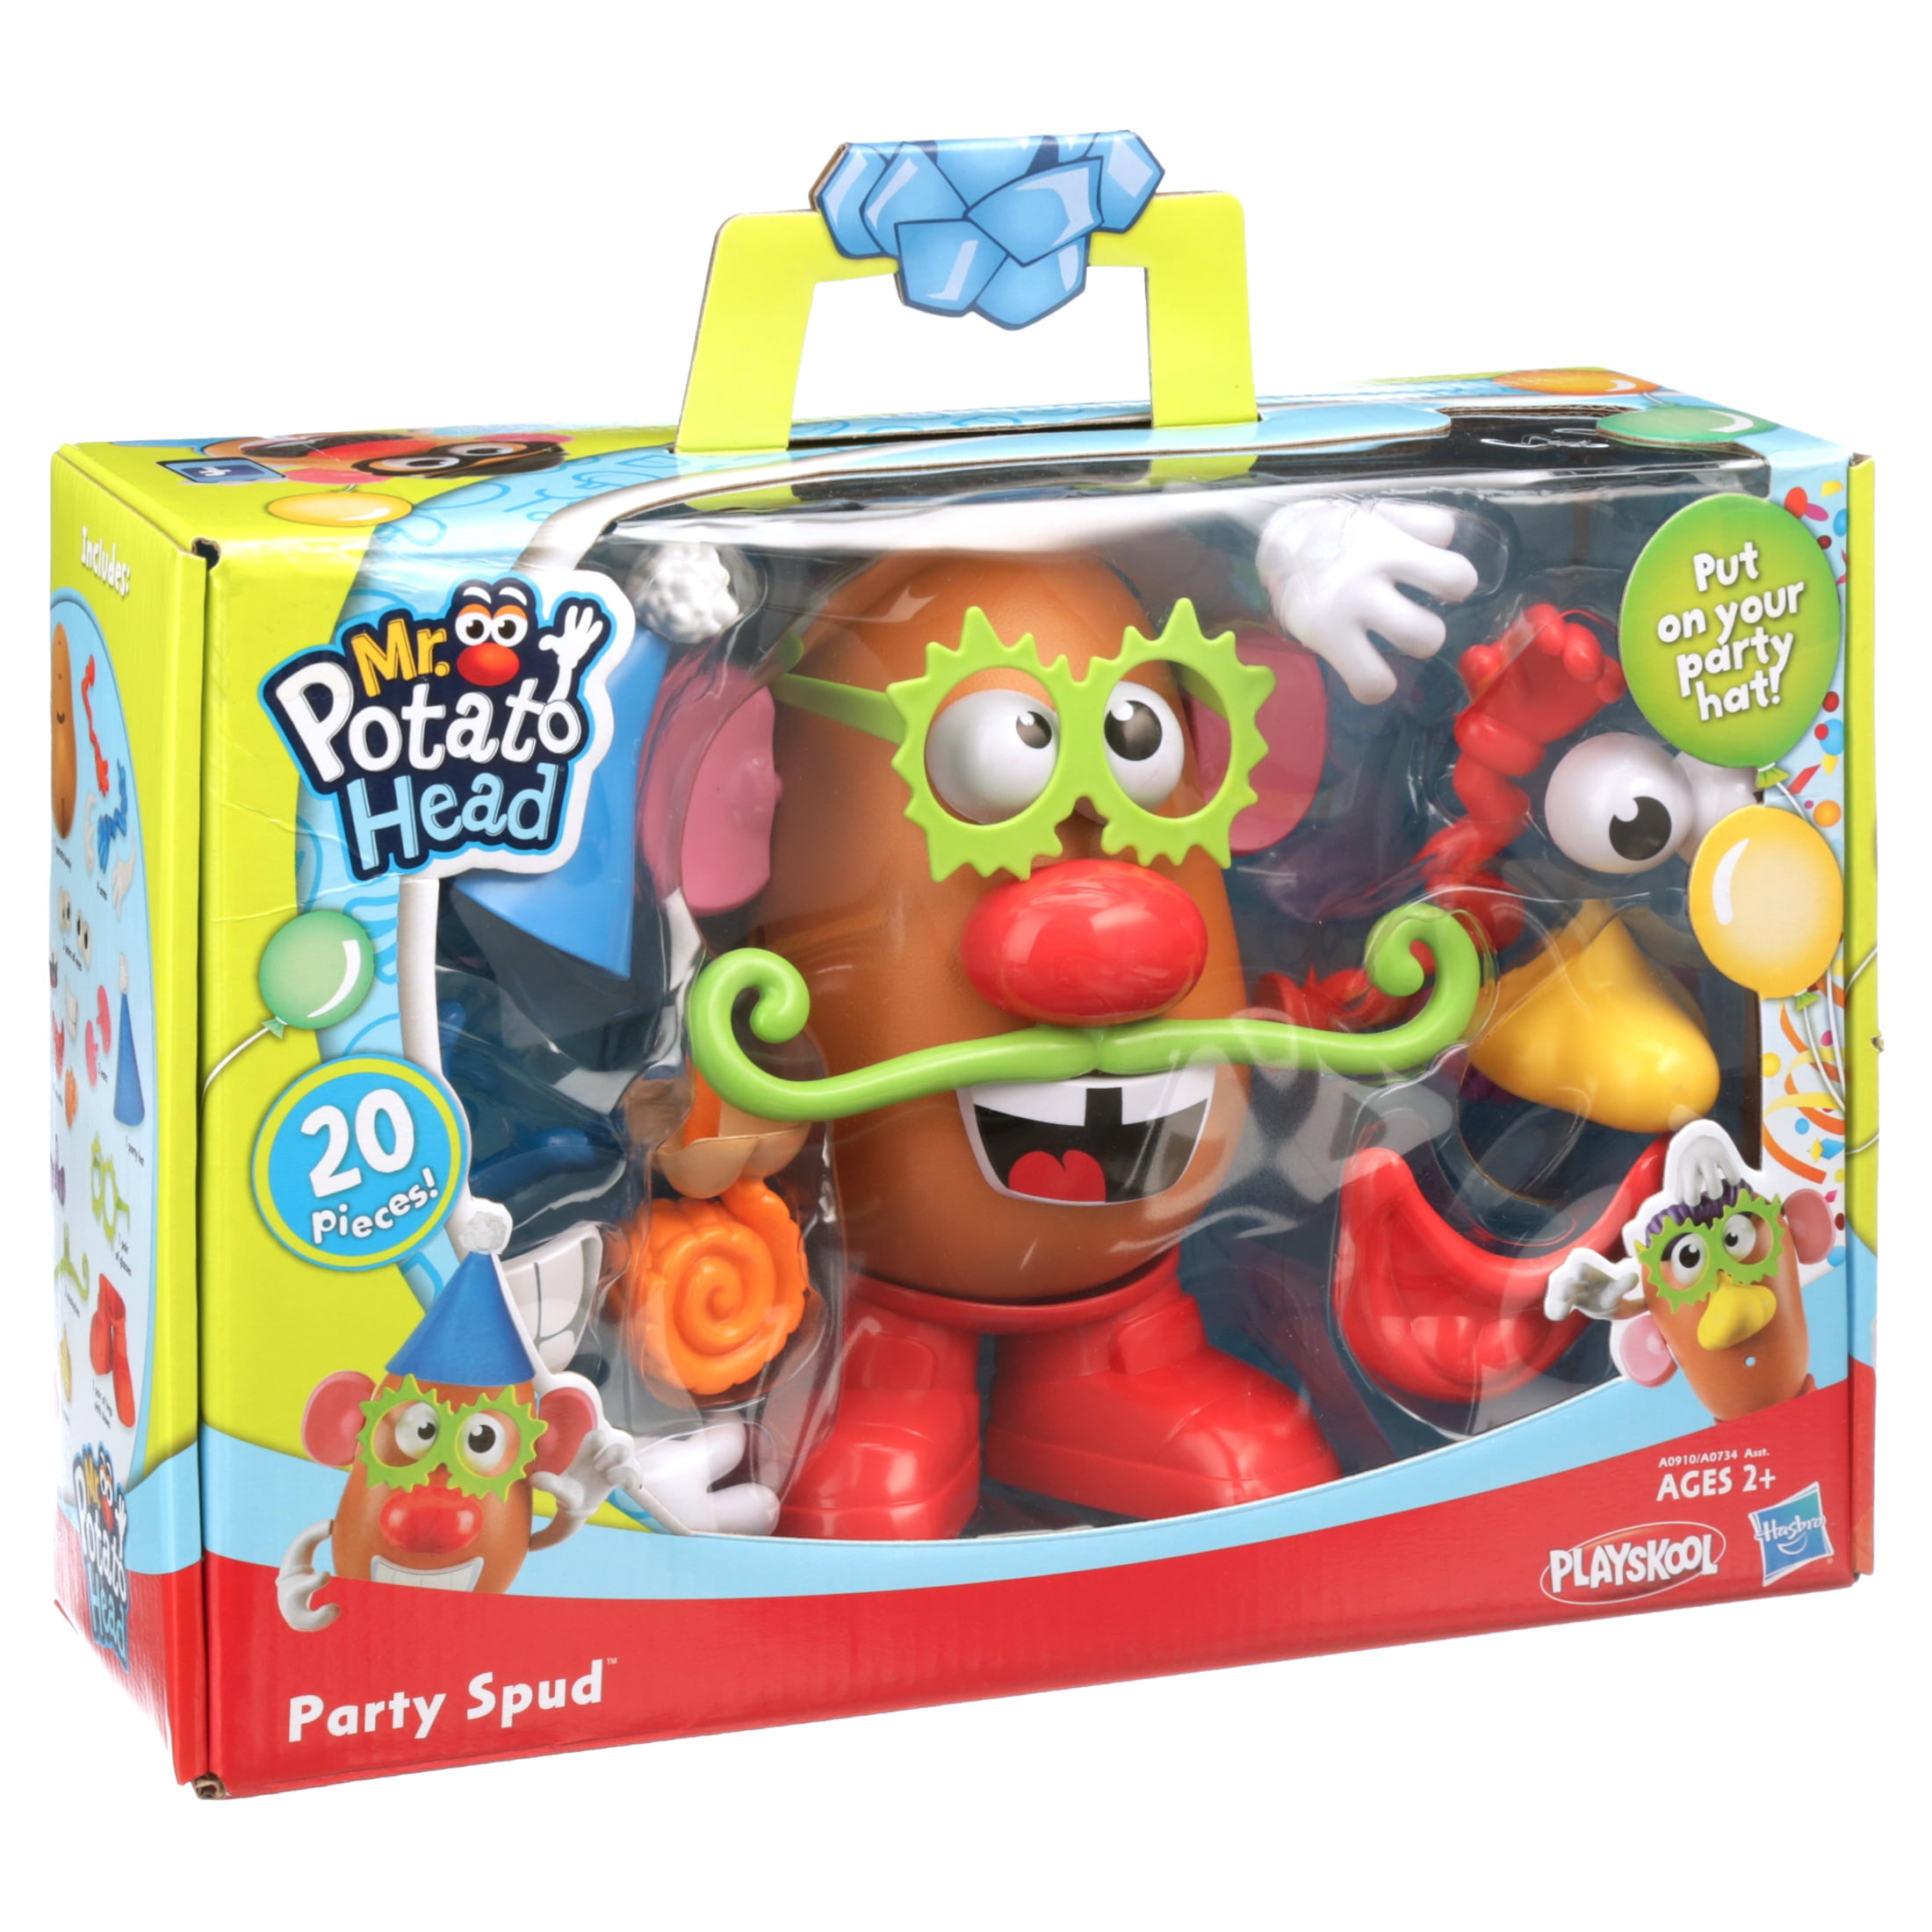 Playskool Mr Potato Head Party Spud Figure for sale online A0910 